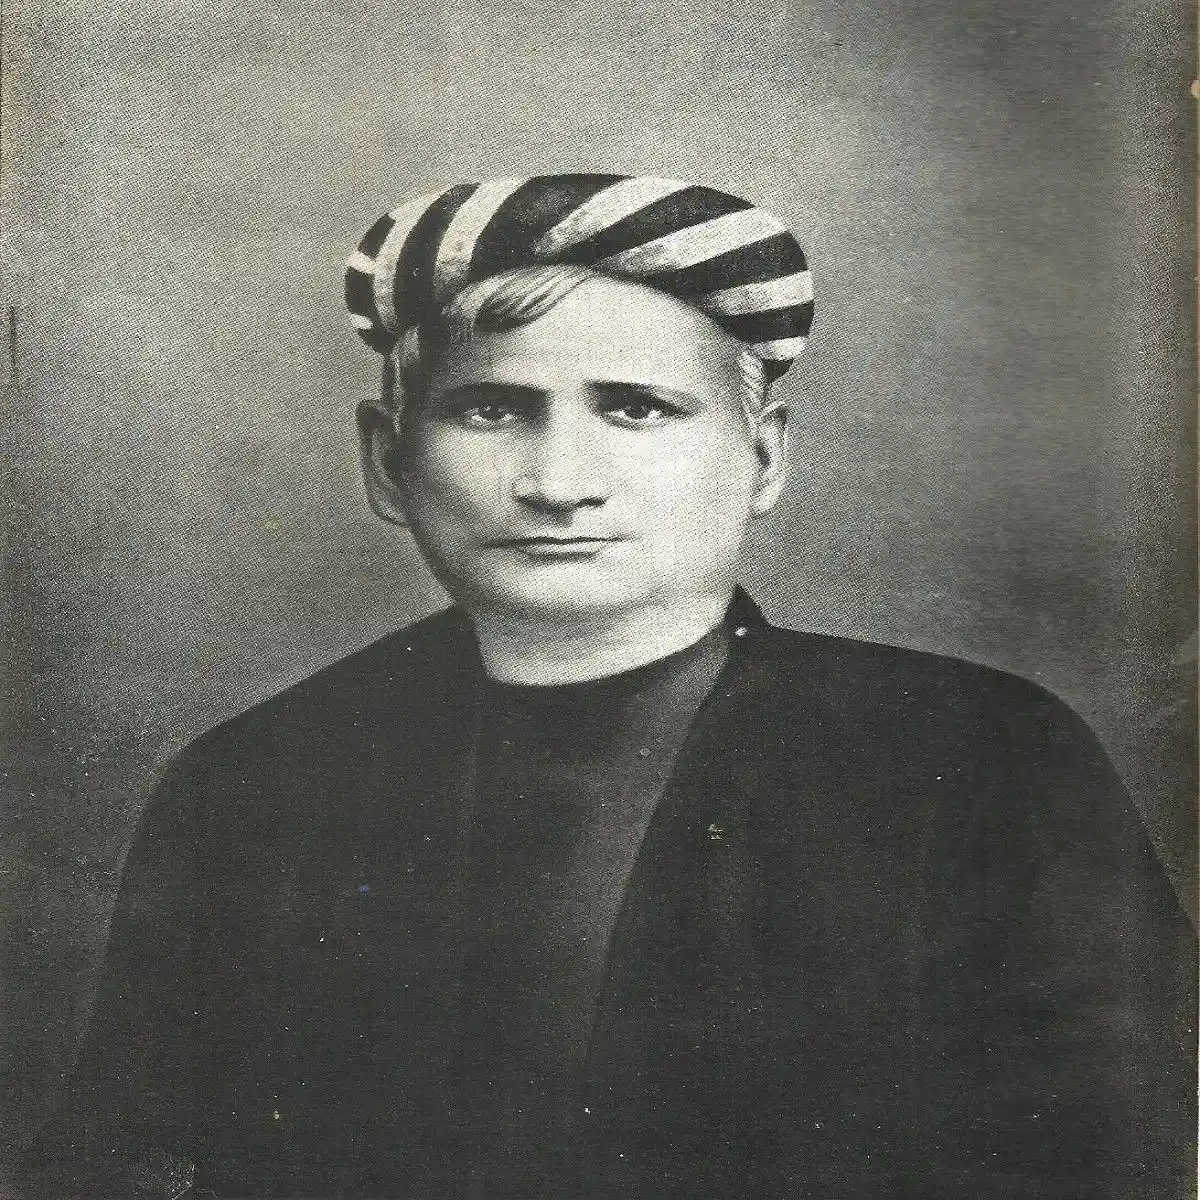 The man who composed Vande Mataram, Image Source- Wikipedia